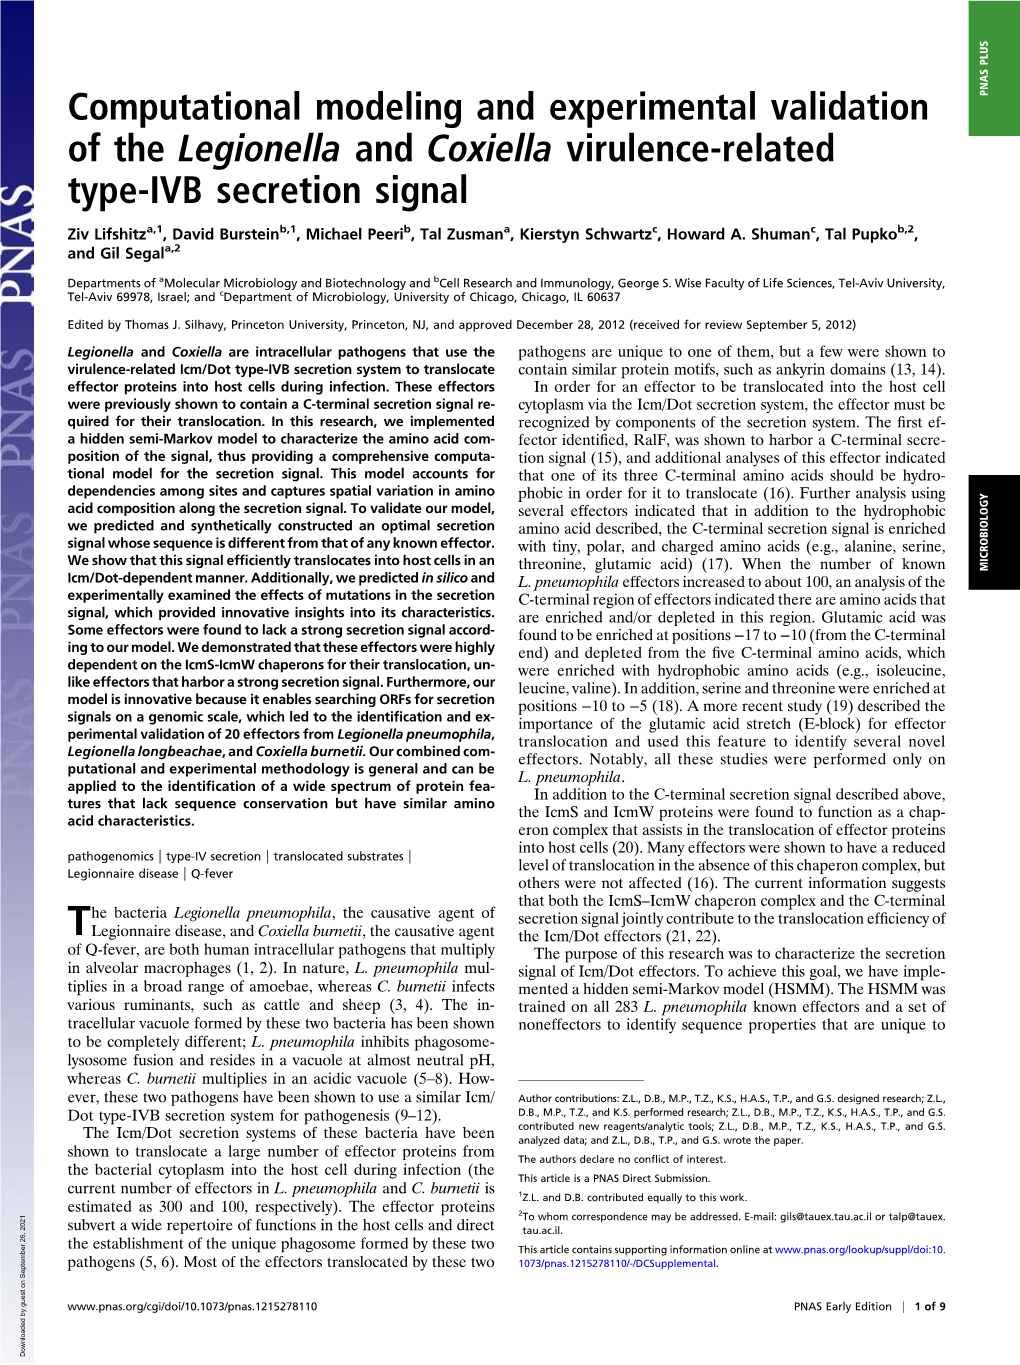 Computational Modeling and Experimental Validation of the Legionella and Coxiella Virulence-Related Type-IVB Secretion Signal